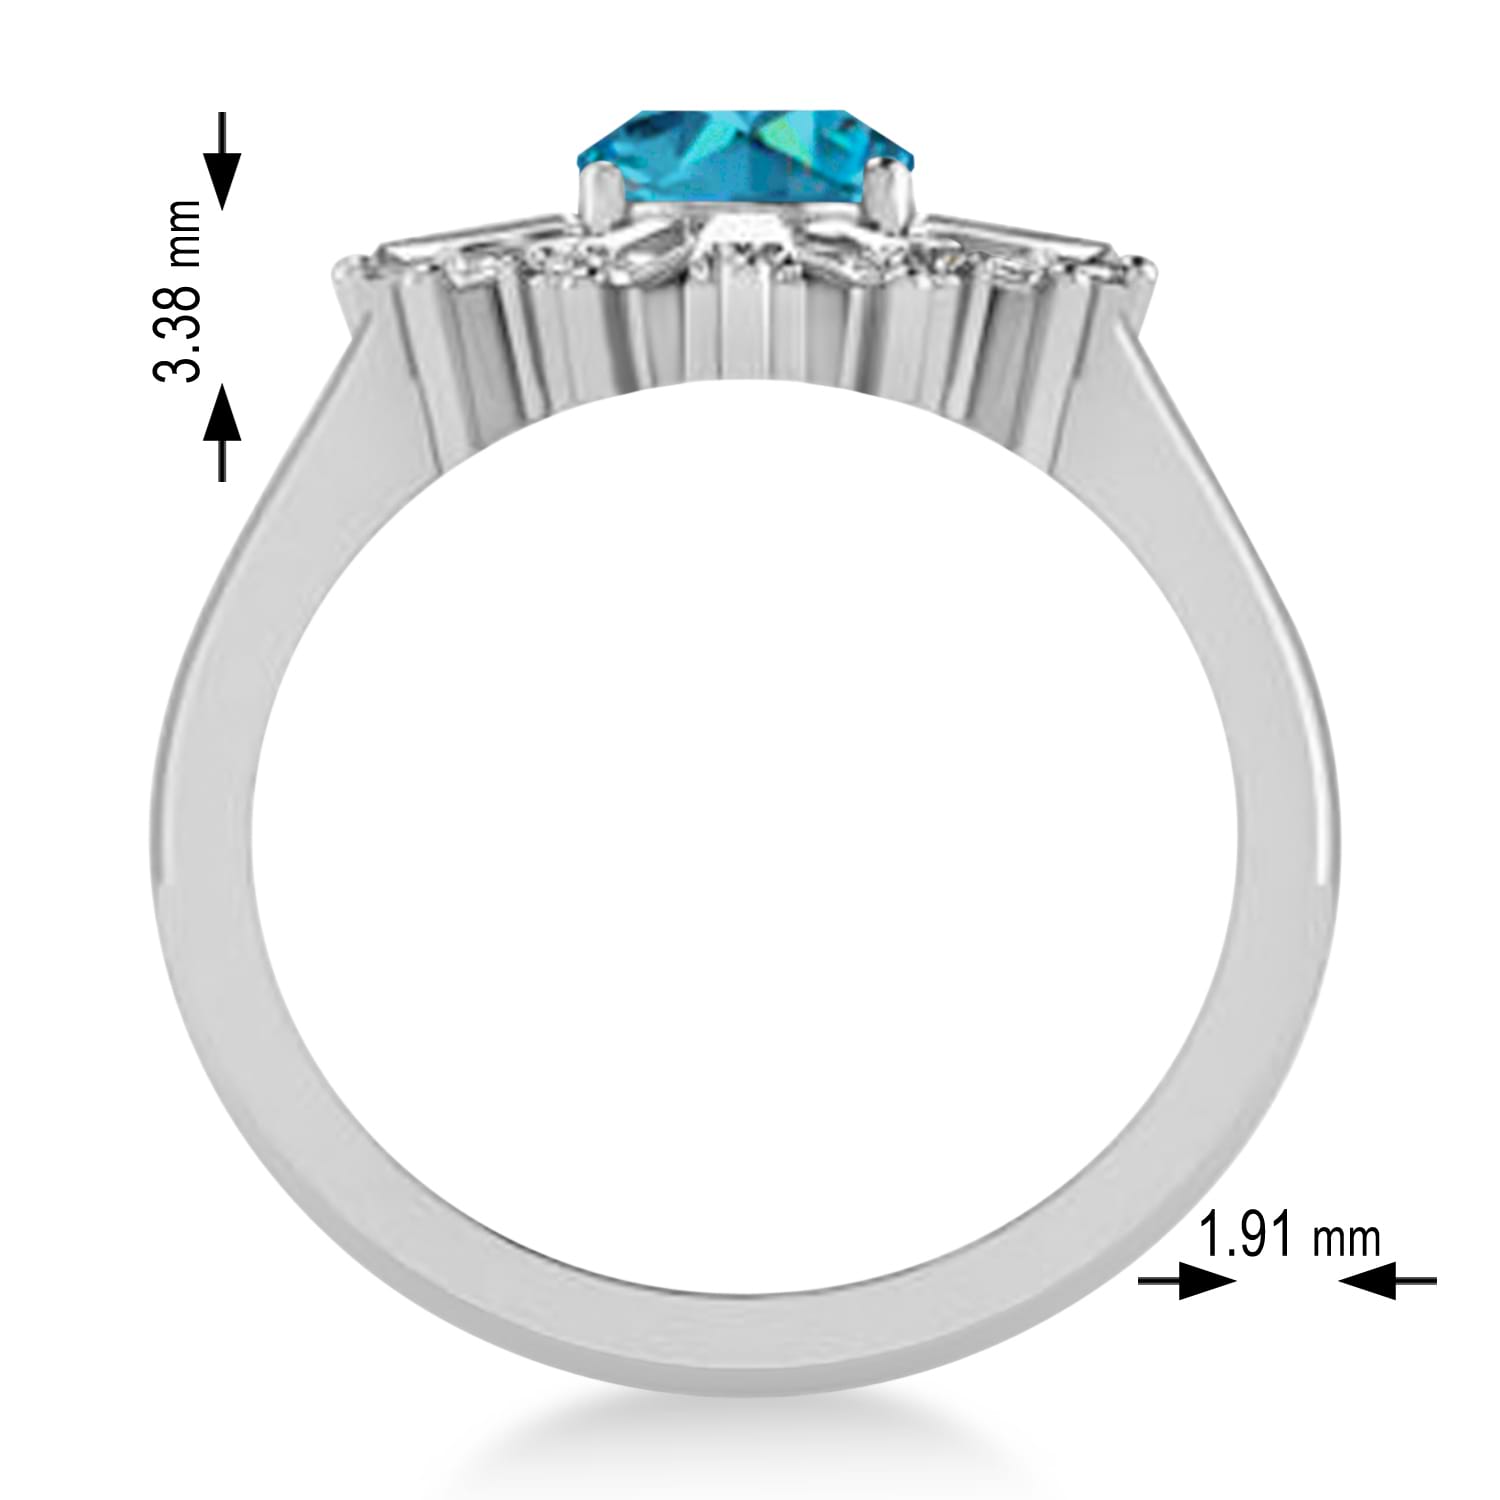 Blue Diamond Oval Cut Ballerina Engagement Ring 14k White Gold (2.51 ctw)